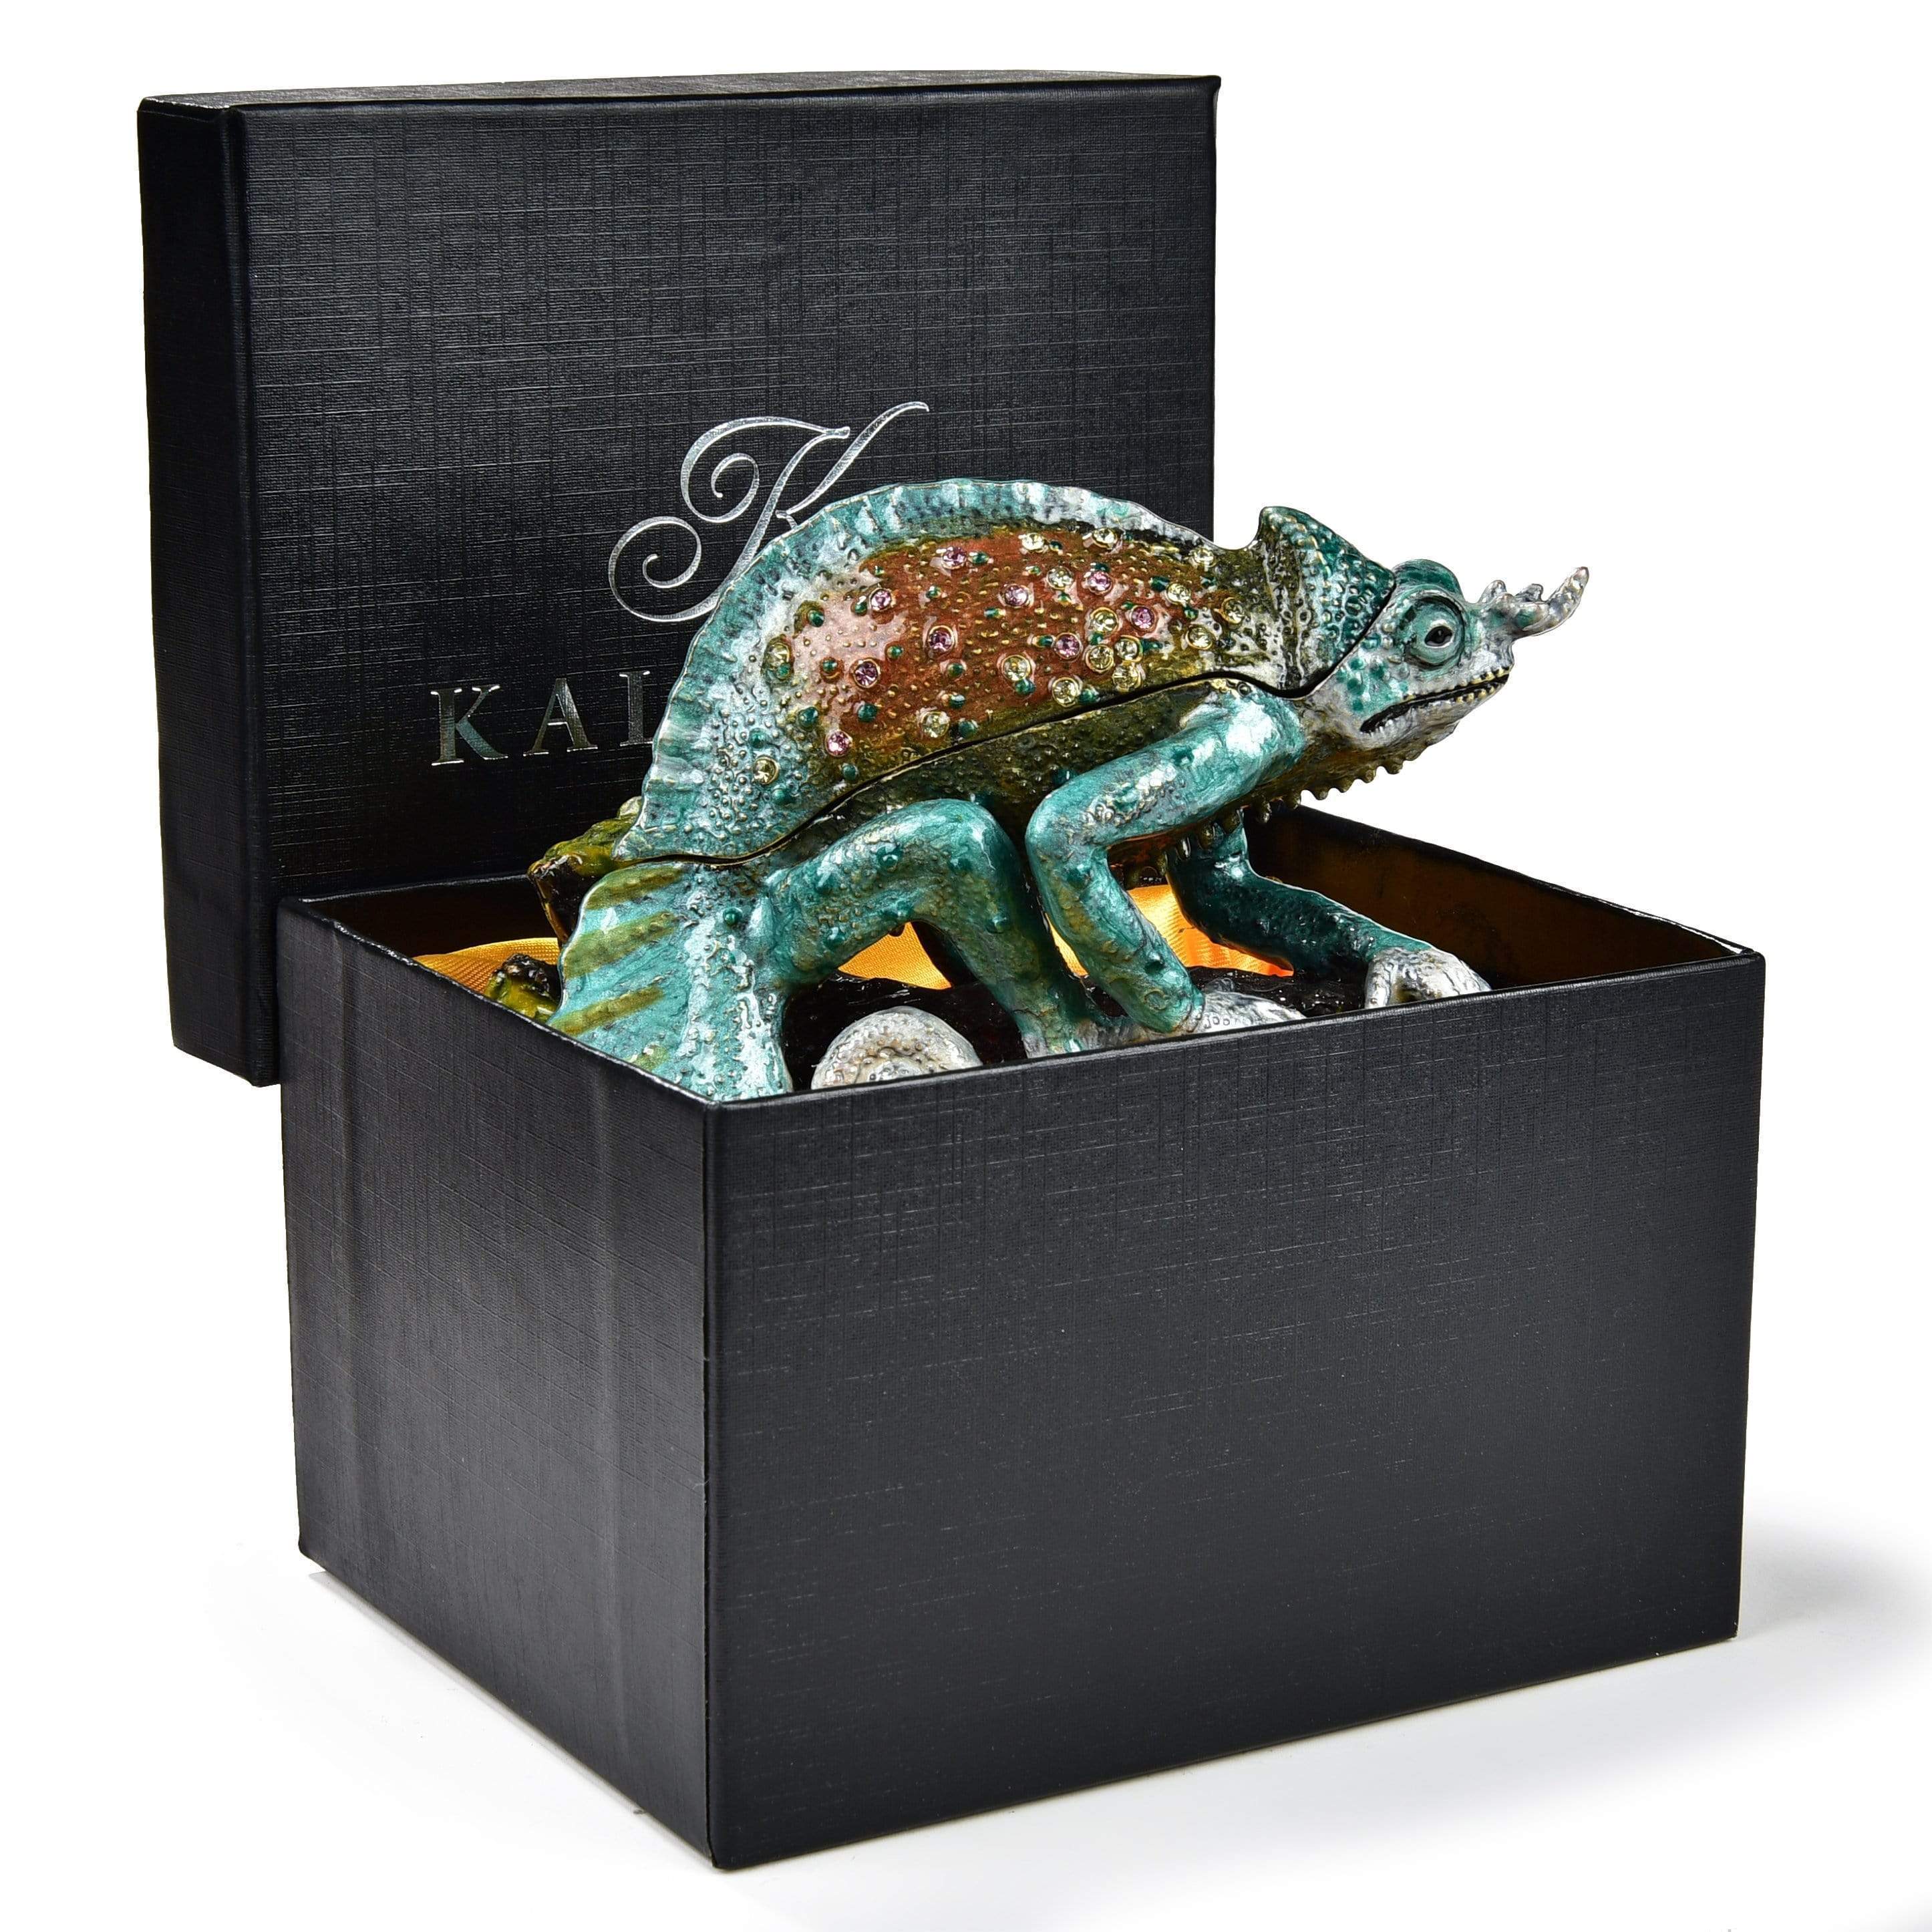 Kalifano Vanity Figurine Vanity Chameleon Figurine Keepsake Box made with Crystals SVA-052